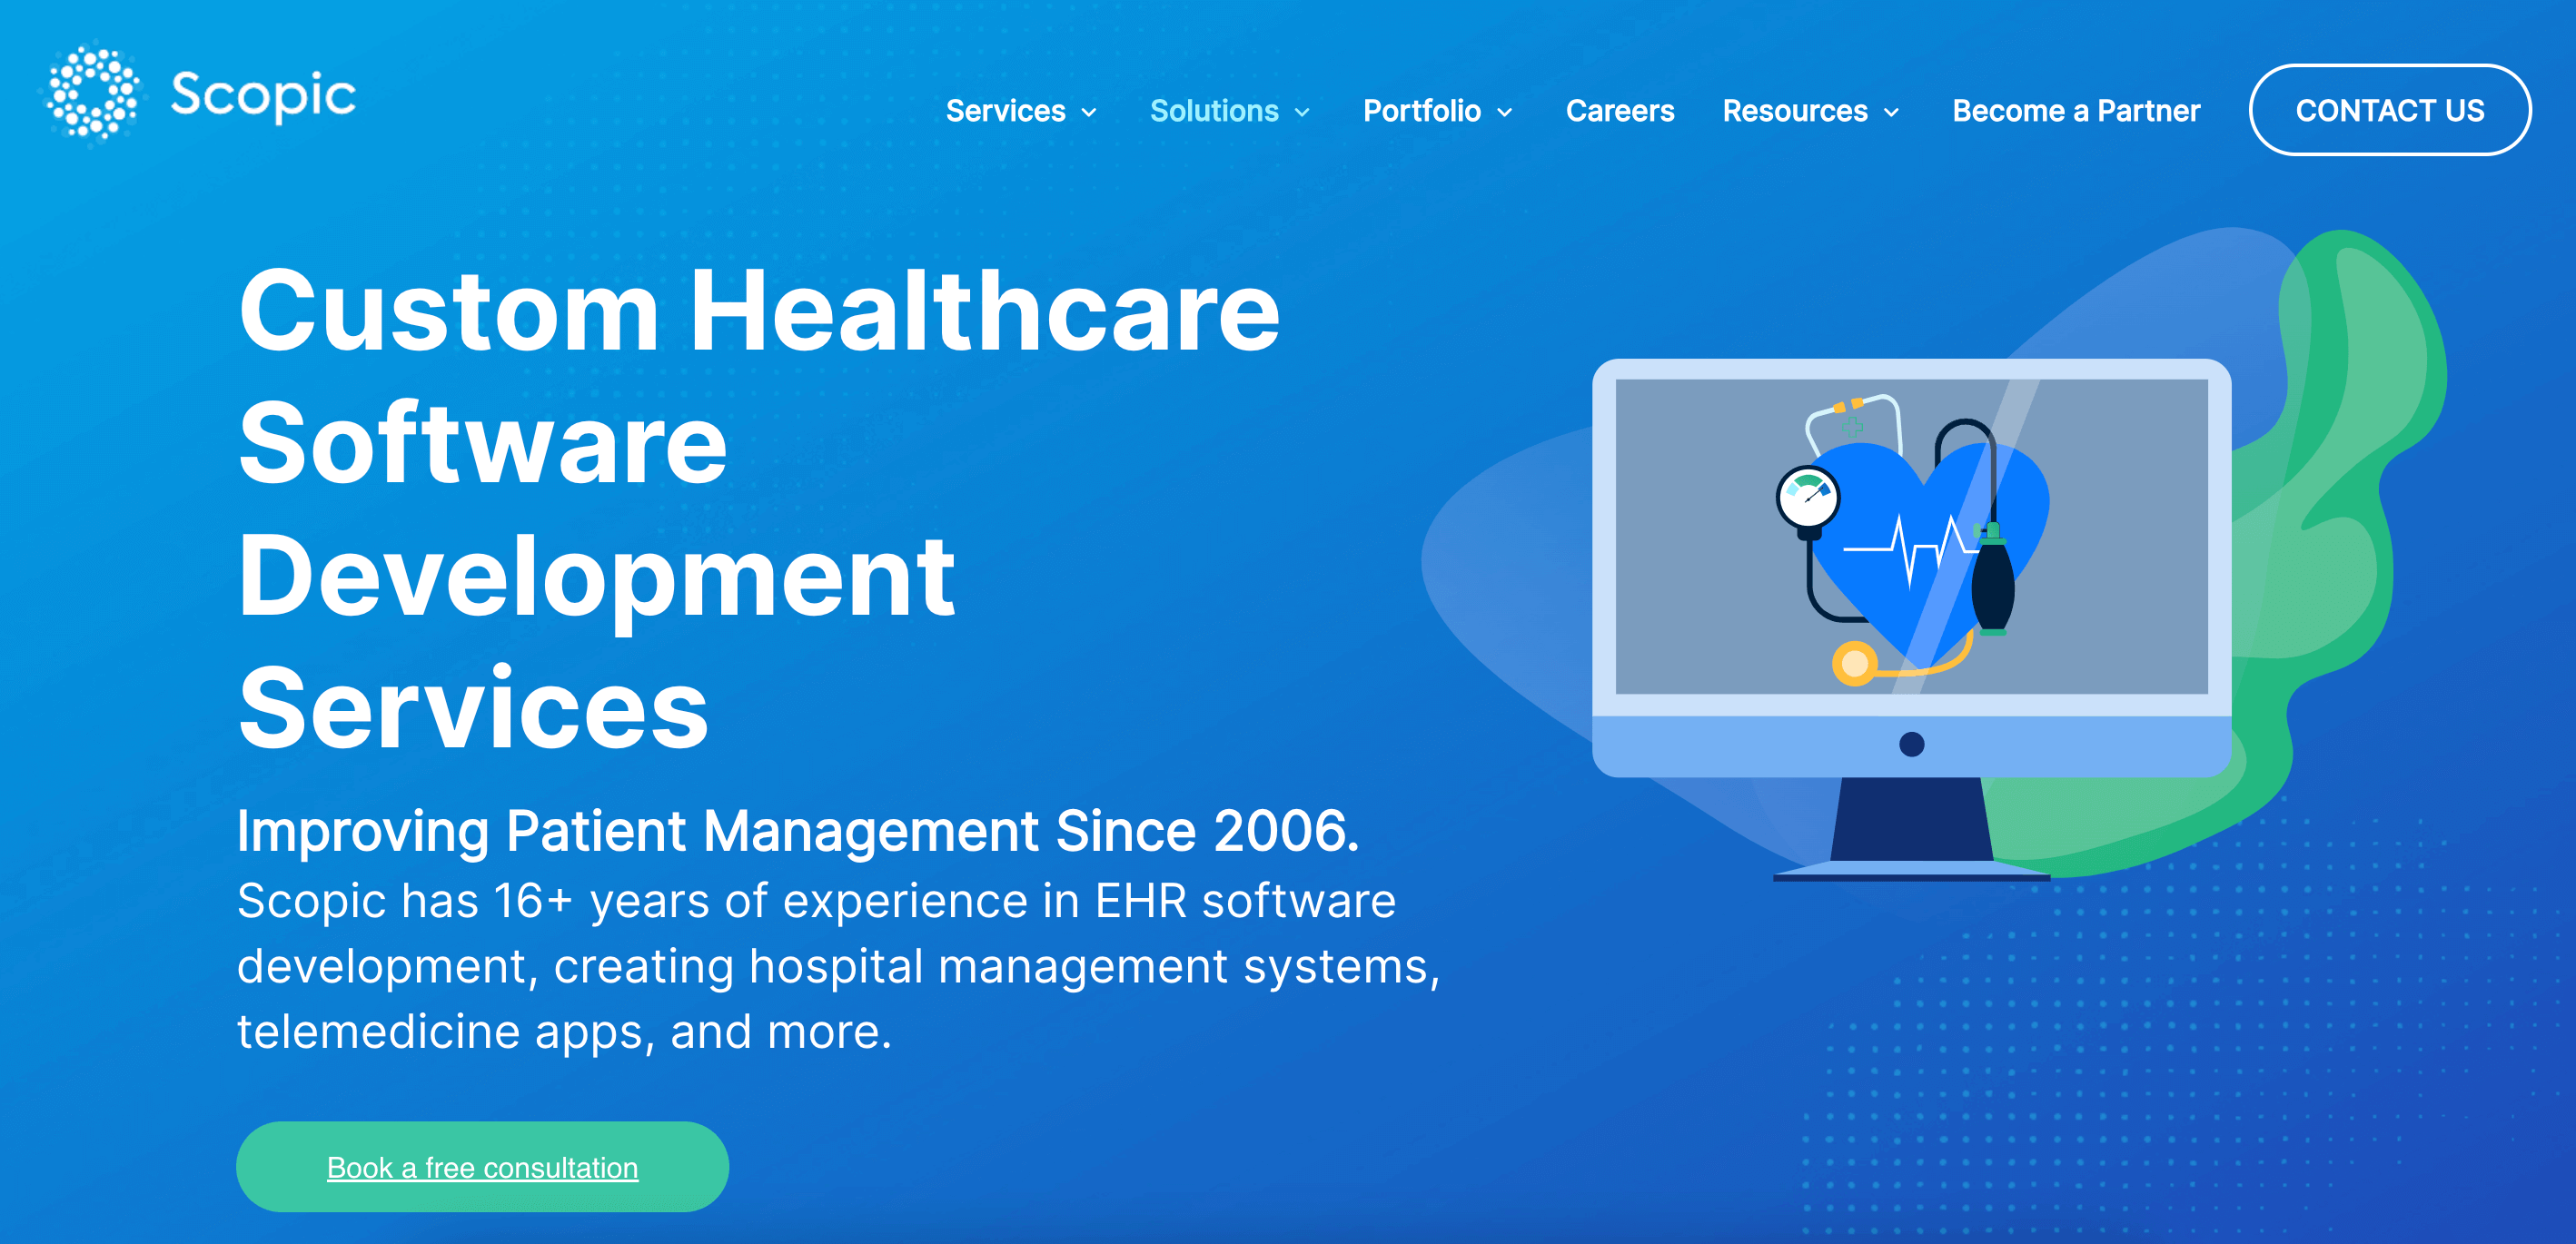 Top Healthcare Software Developers